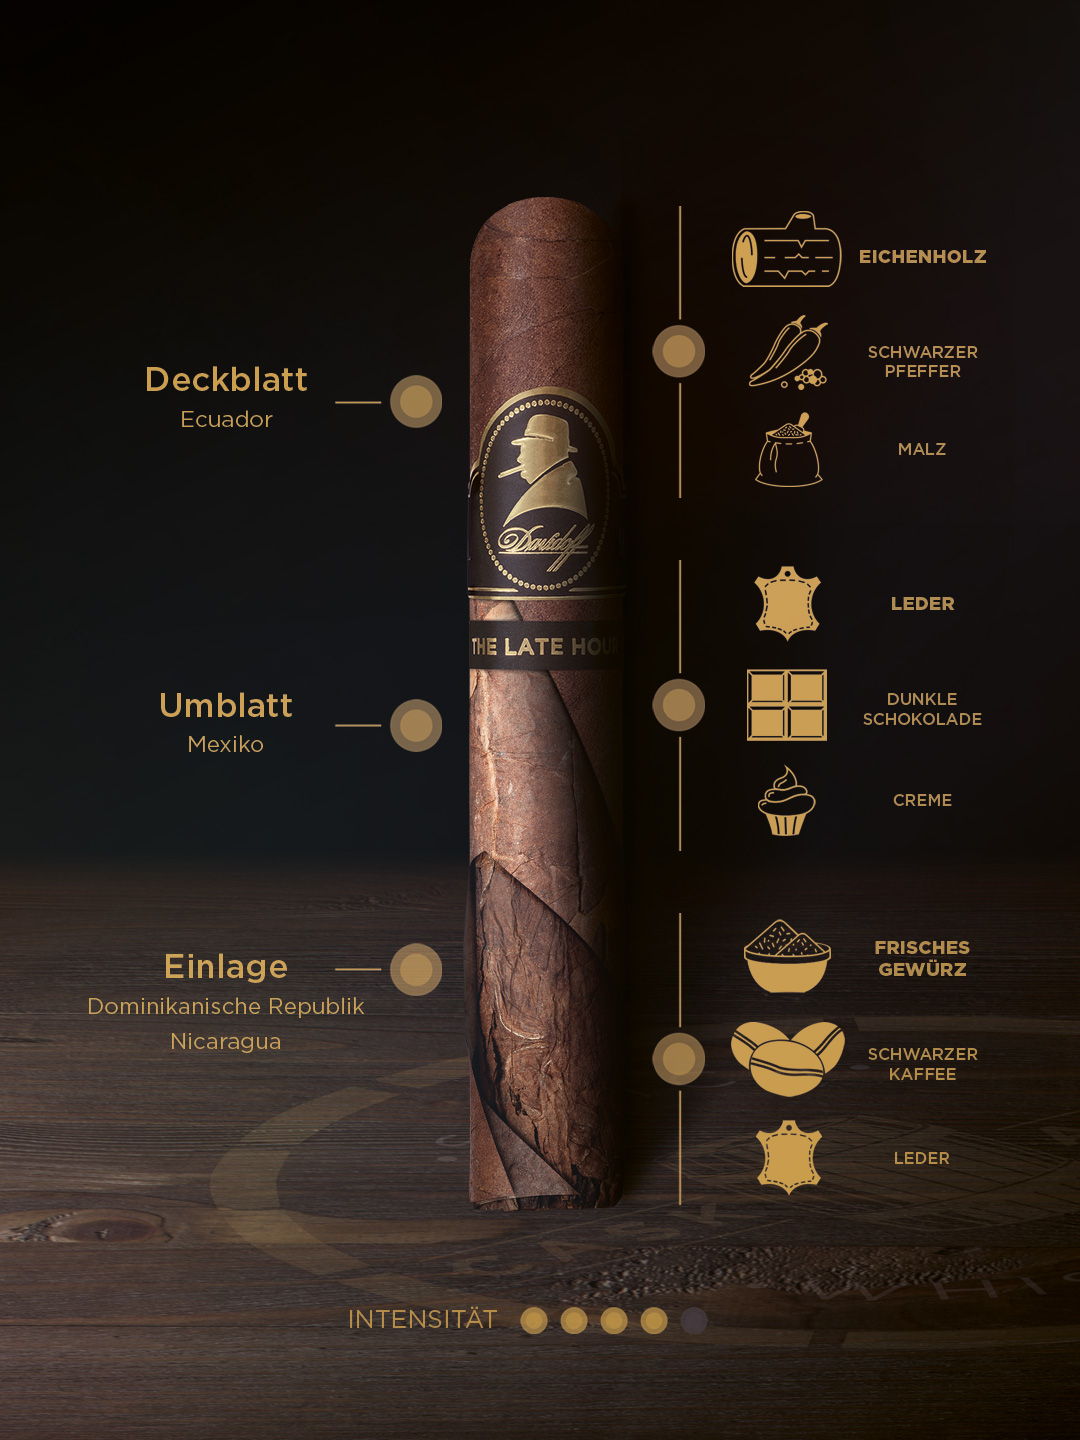 Geschmacksdetail-Banner der Davidoff Winston Churchill «The Late Hour Series» inklusive Hauptaromen, Tabakherkunft und Intensität.